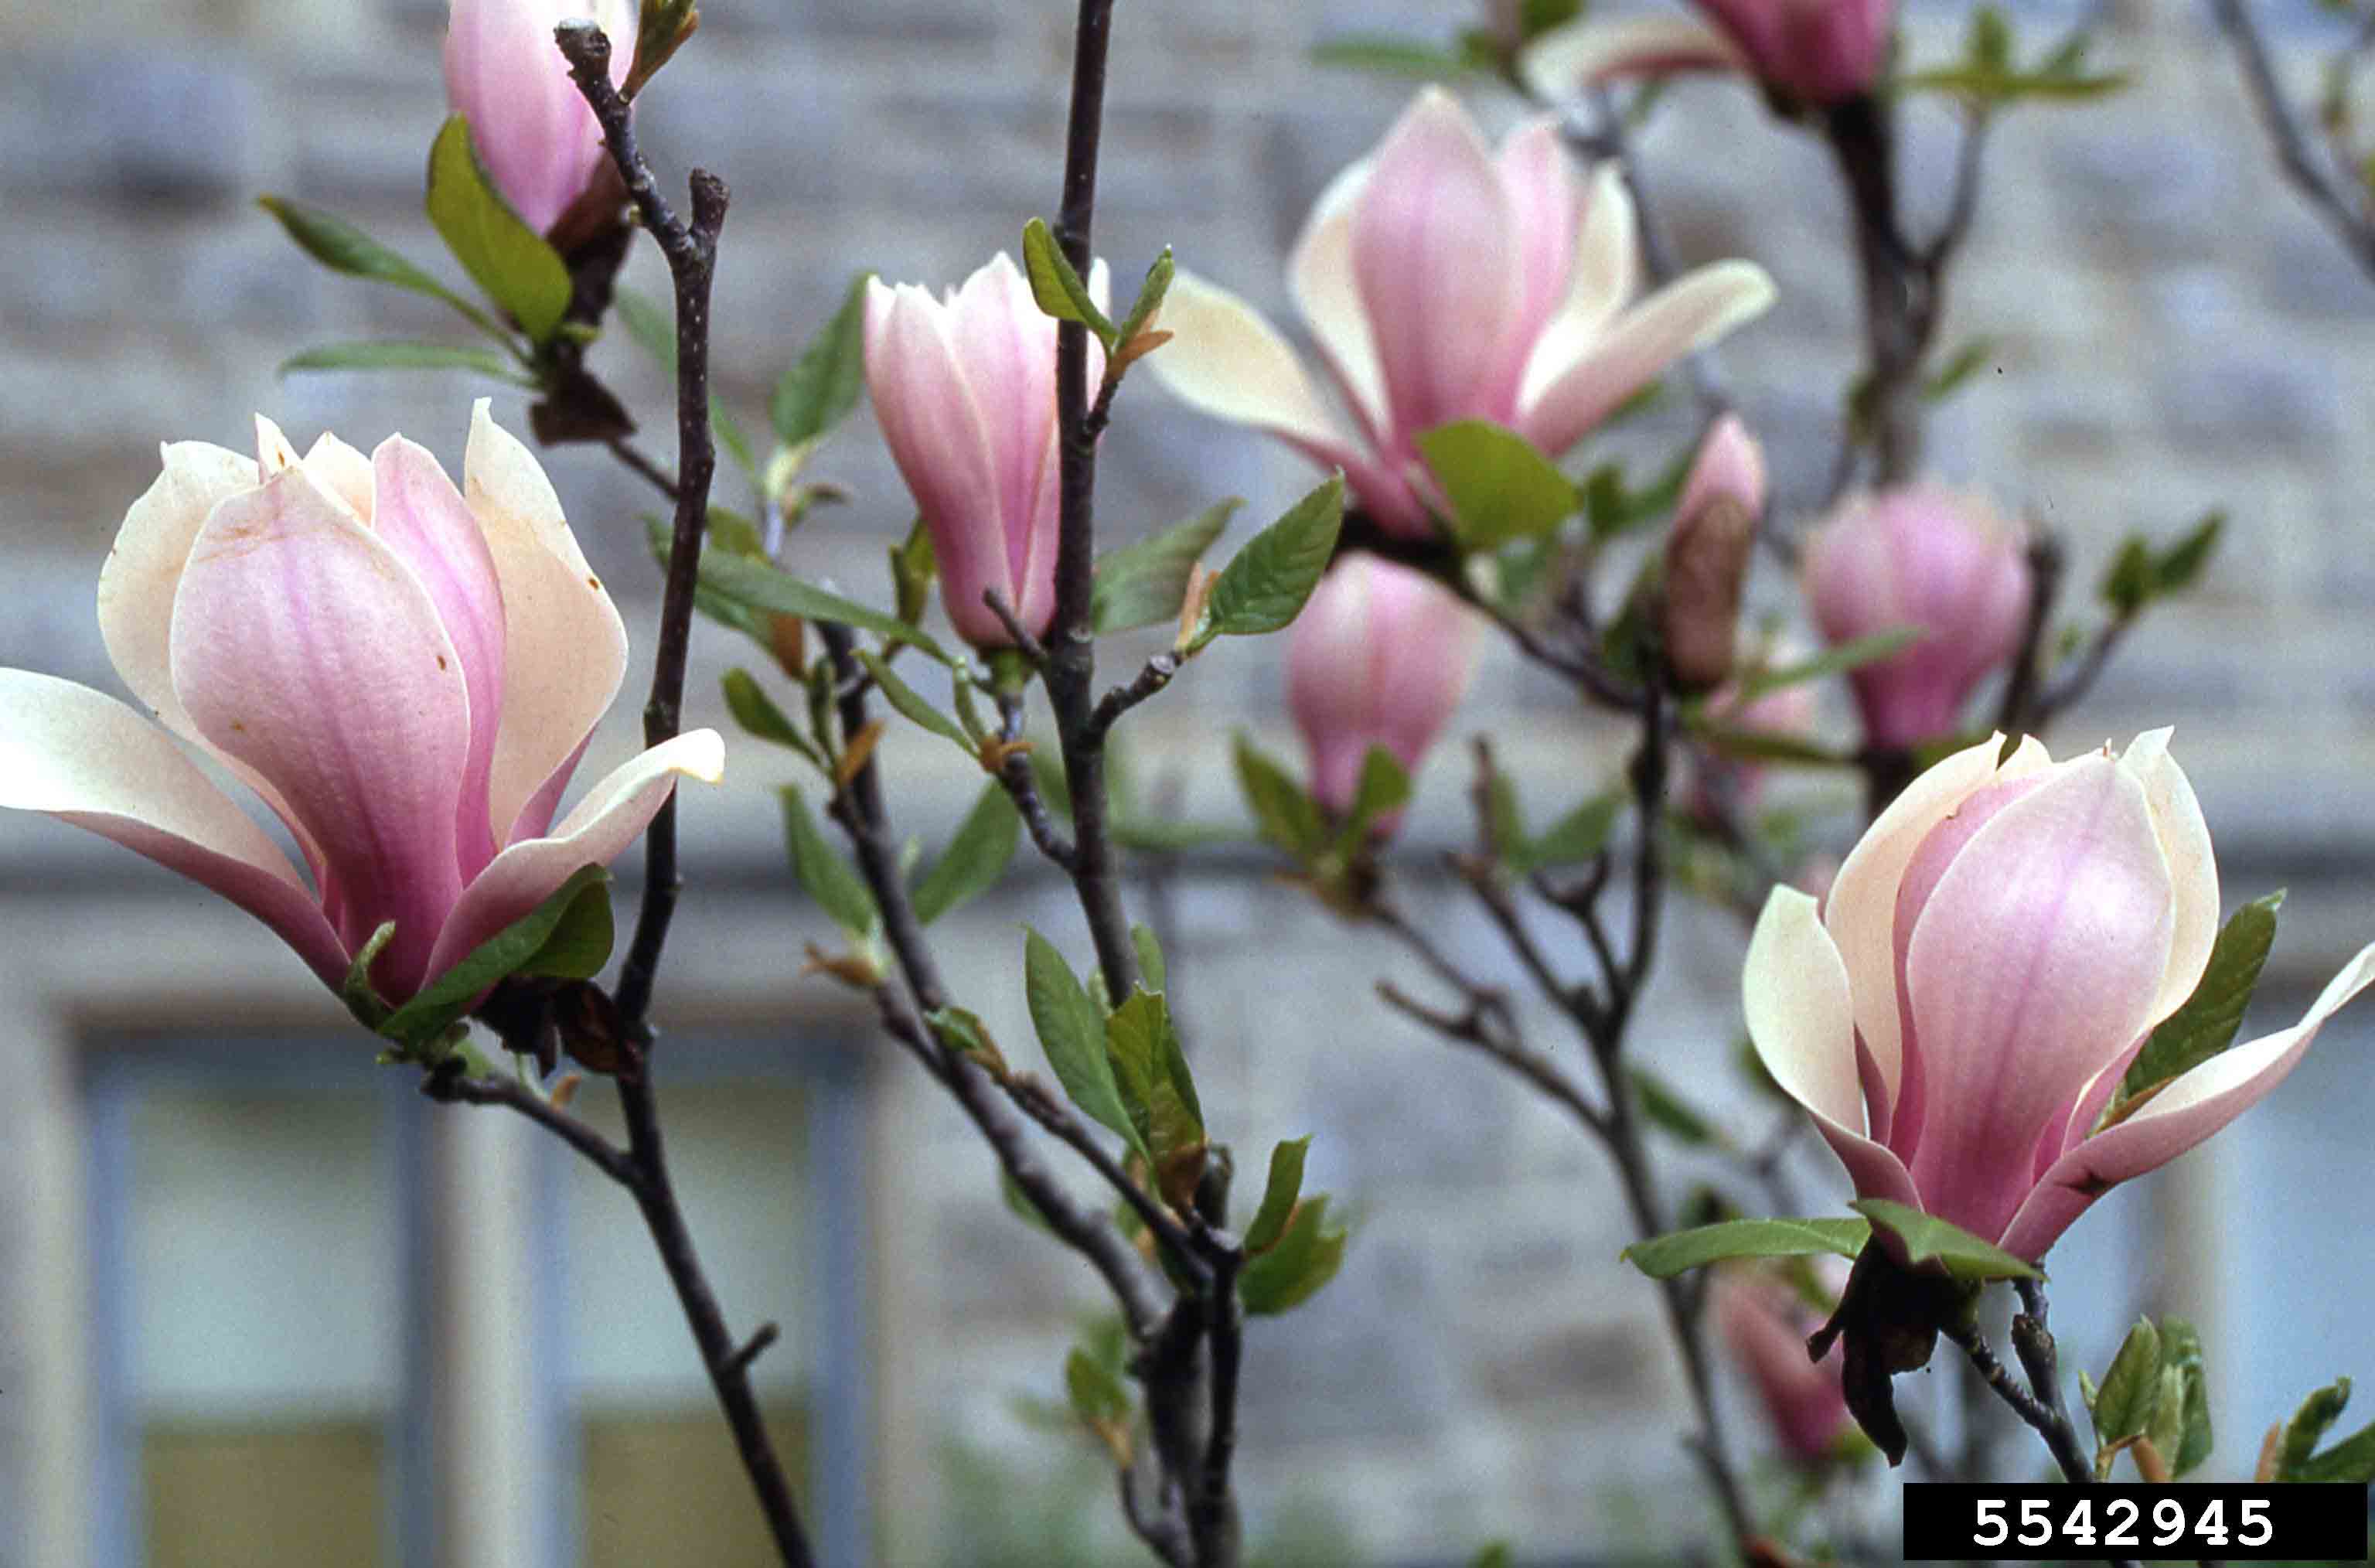 Saucer magnolia flowers